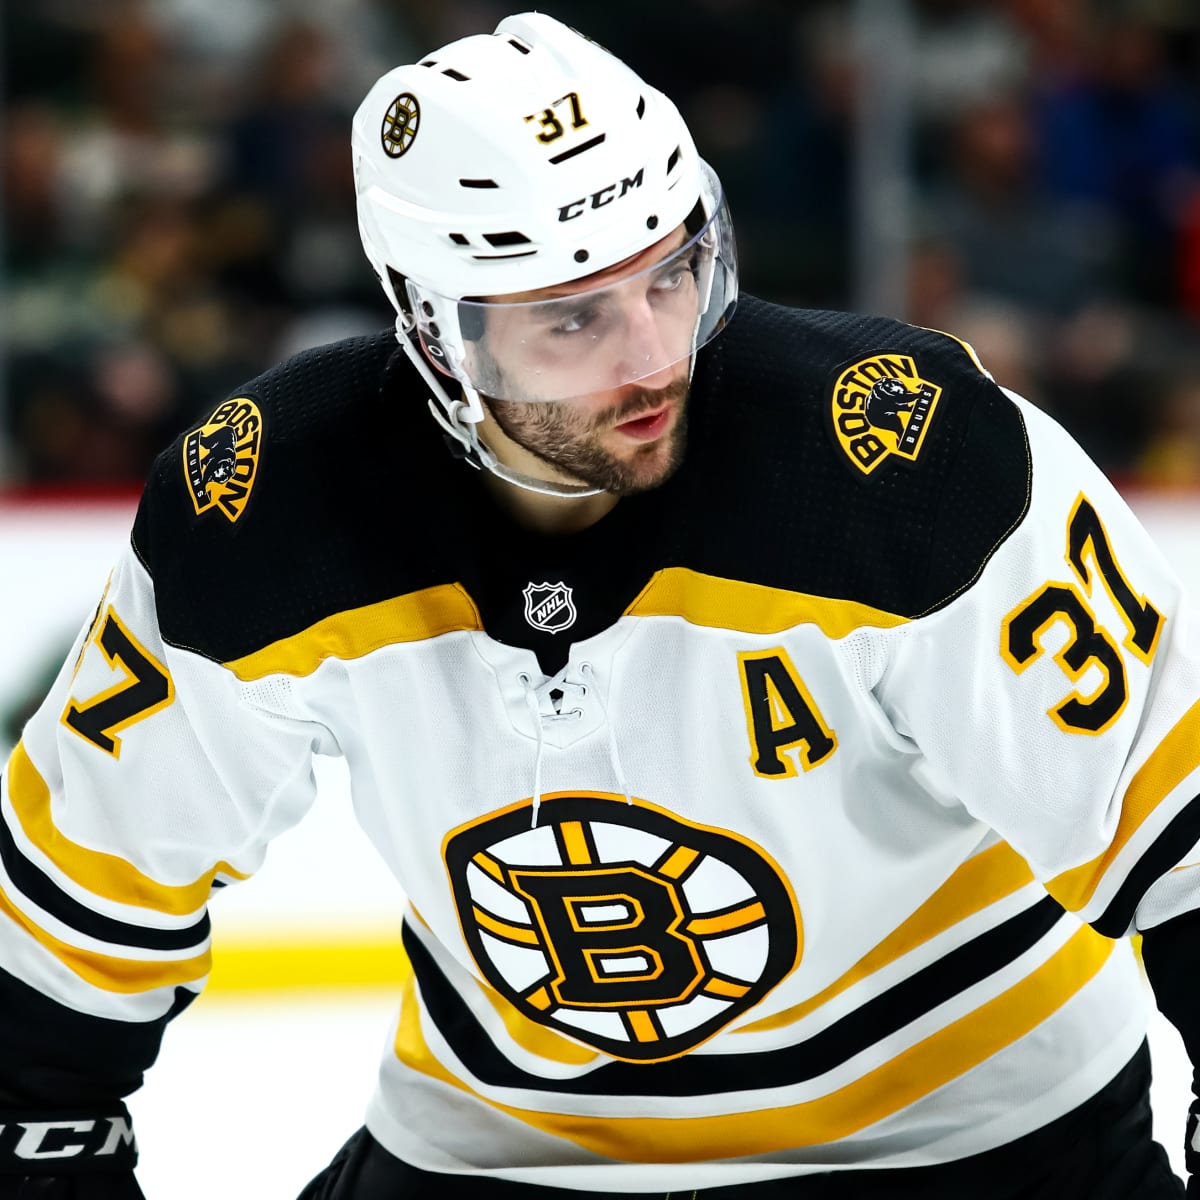 Boston Bruins 2021 Player Grades: Patrice Bergeron